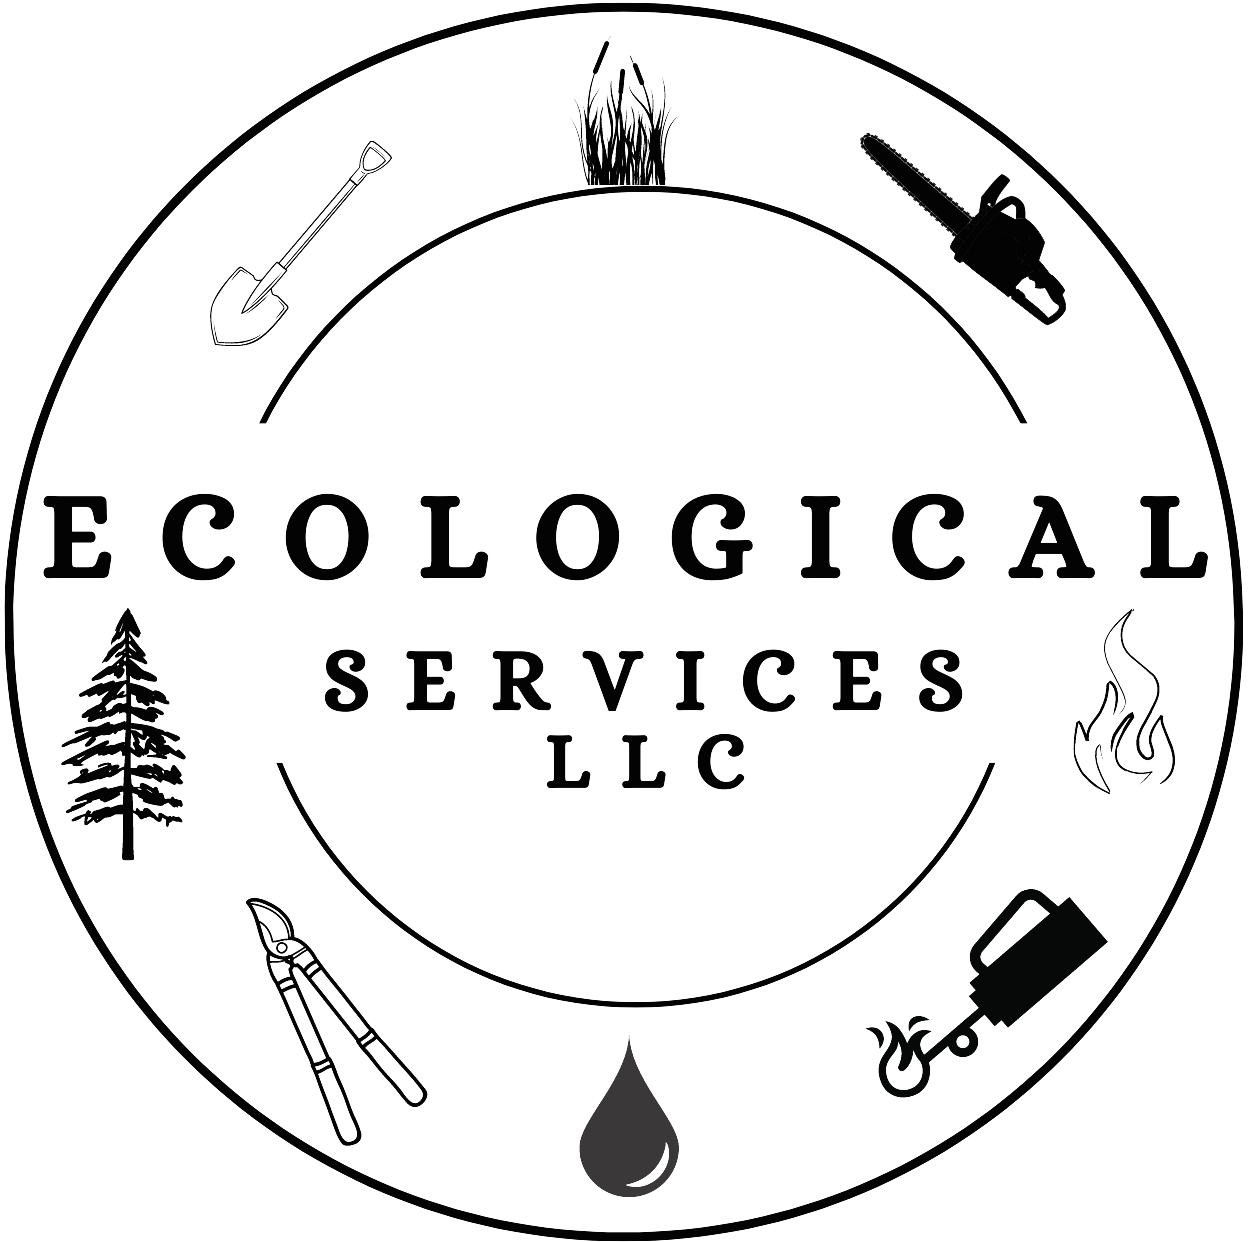 Ecological Services LLC